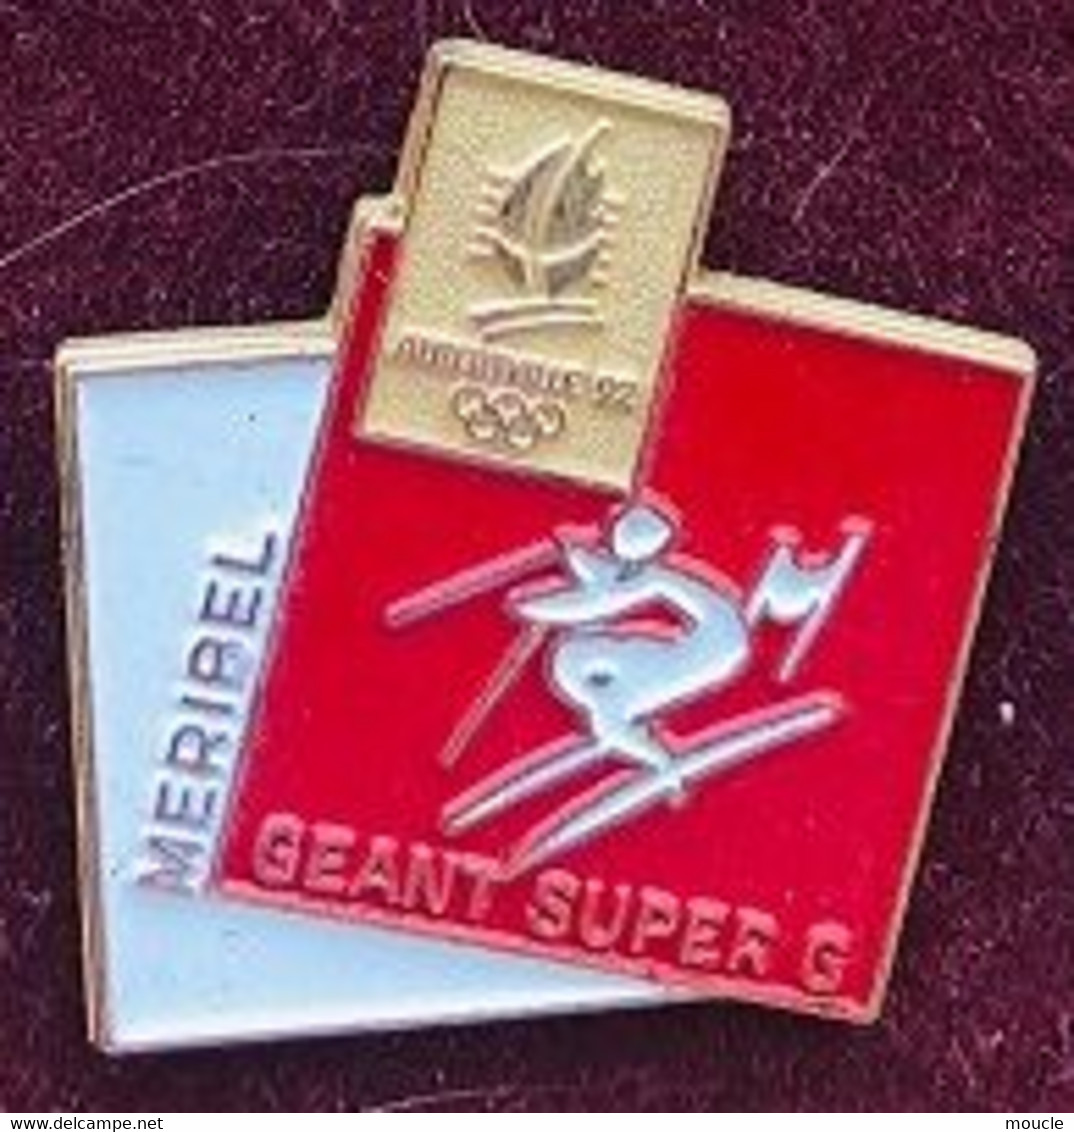 ALBERTVILLE 1992 / 92 - FRANCE - SITE MERIBEL - SKI - SLALOM GEANT - SUPER G - JEUX OLYMPIQUES - SAVOIE - ANNEAUX - (JO) - Olympische Spelen